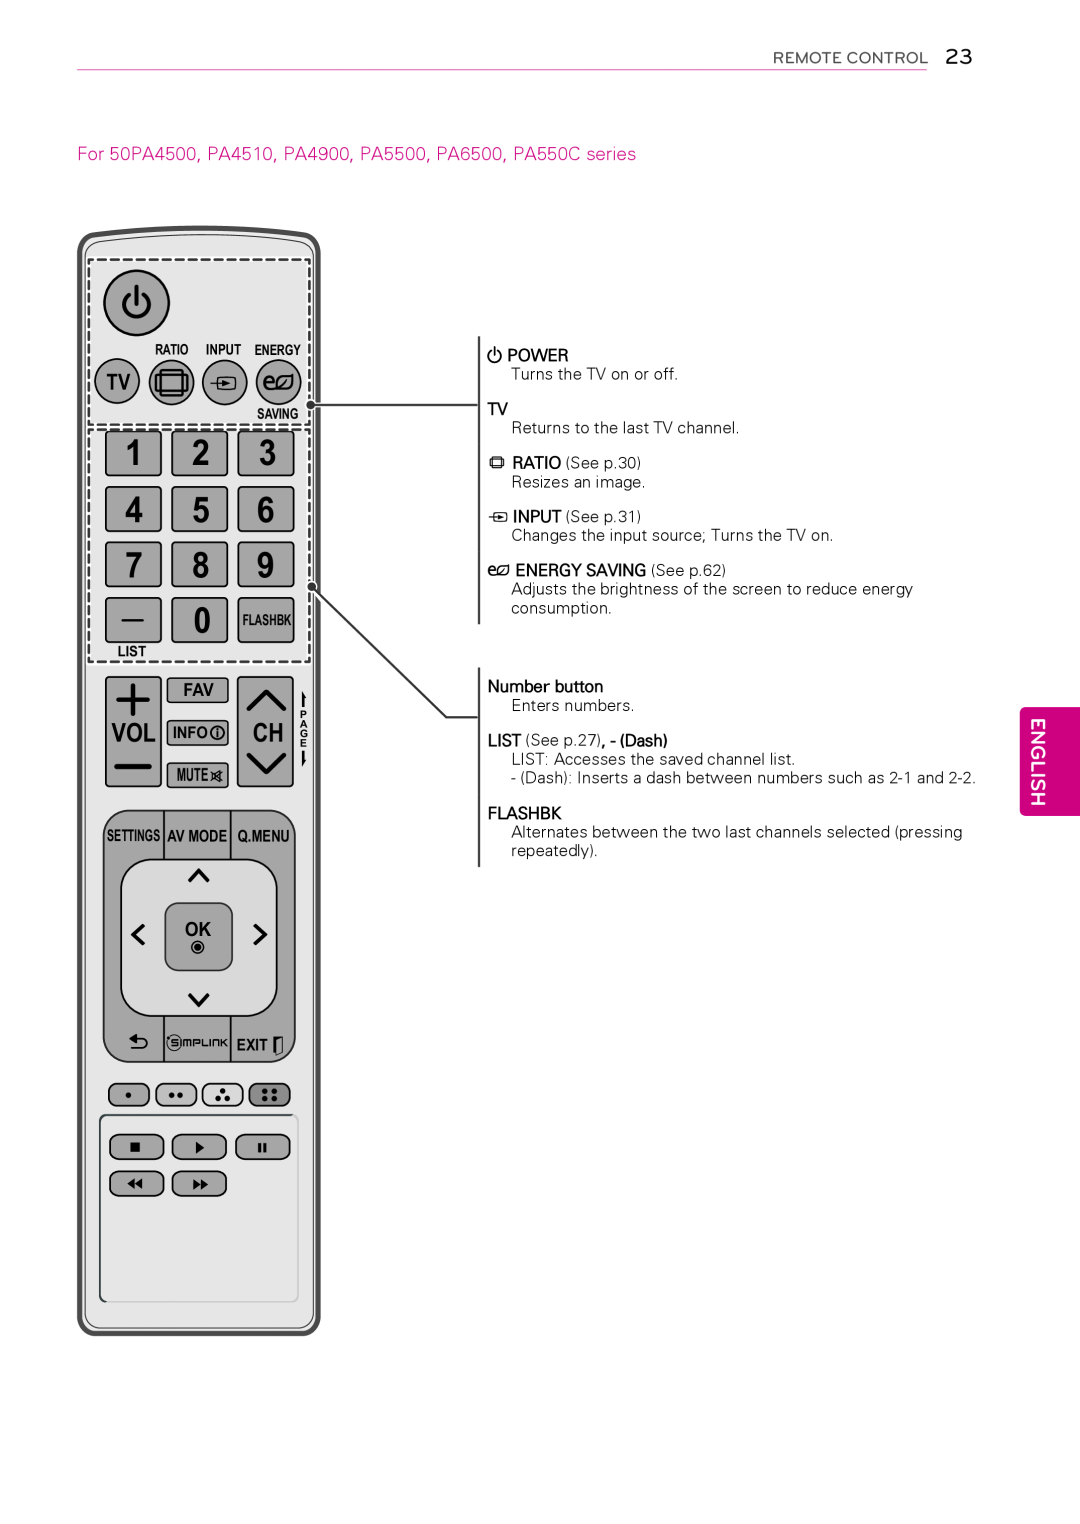 LG Electronics 60PA5500, 60PA6500 English, For 50PA4500, PA4510, PA4900, PA5500, PA6500, PA550C series, Remote Control 